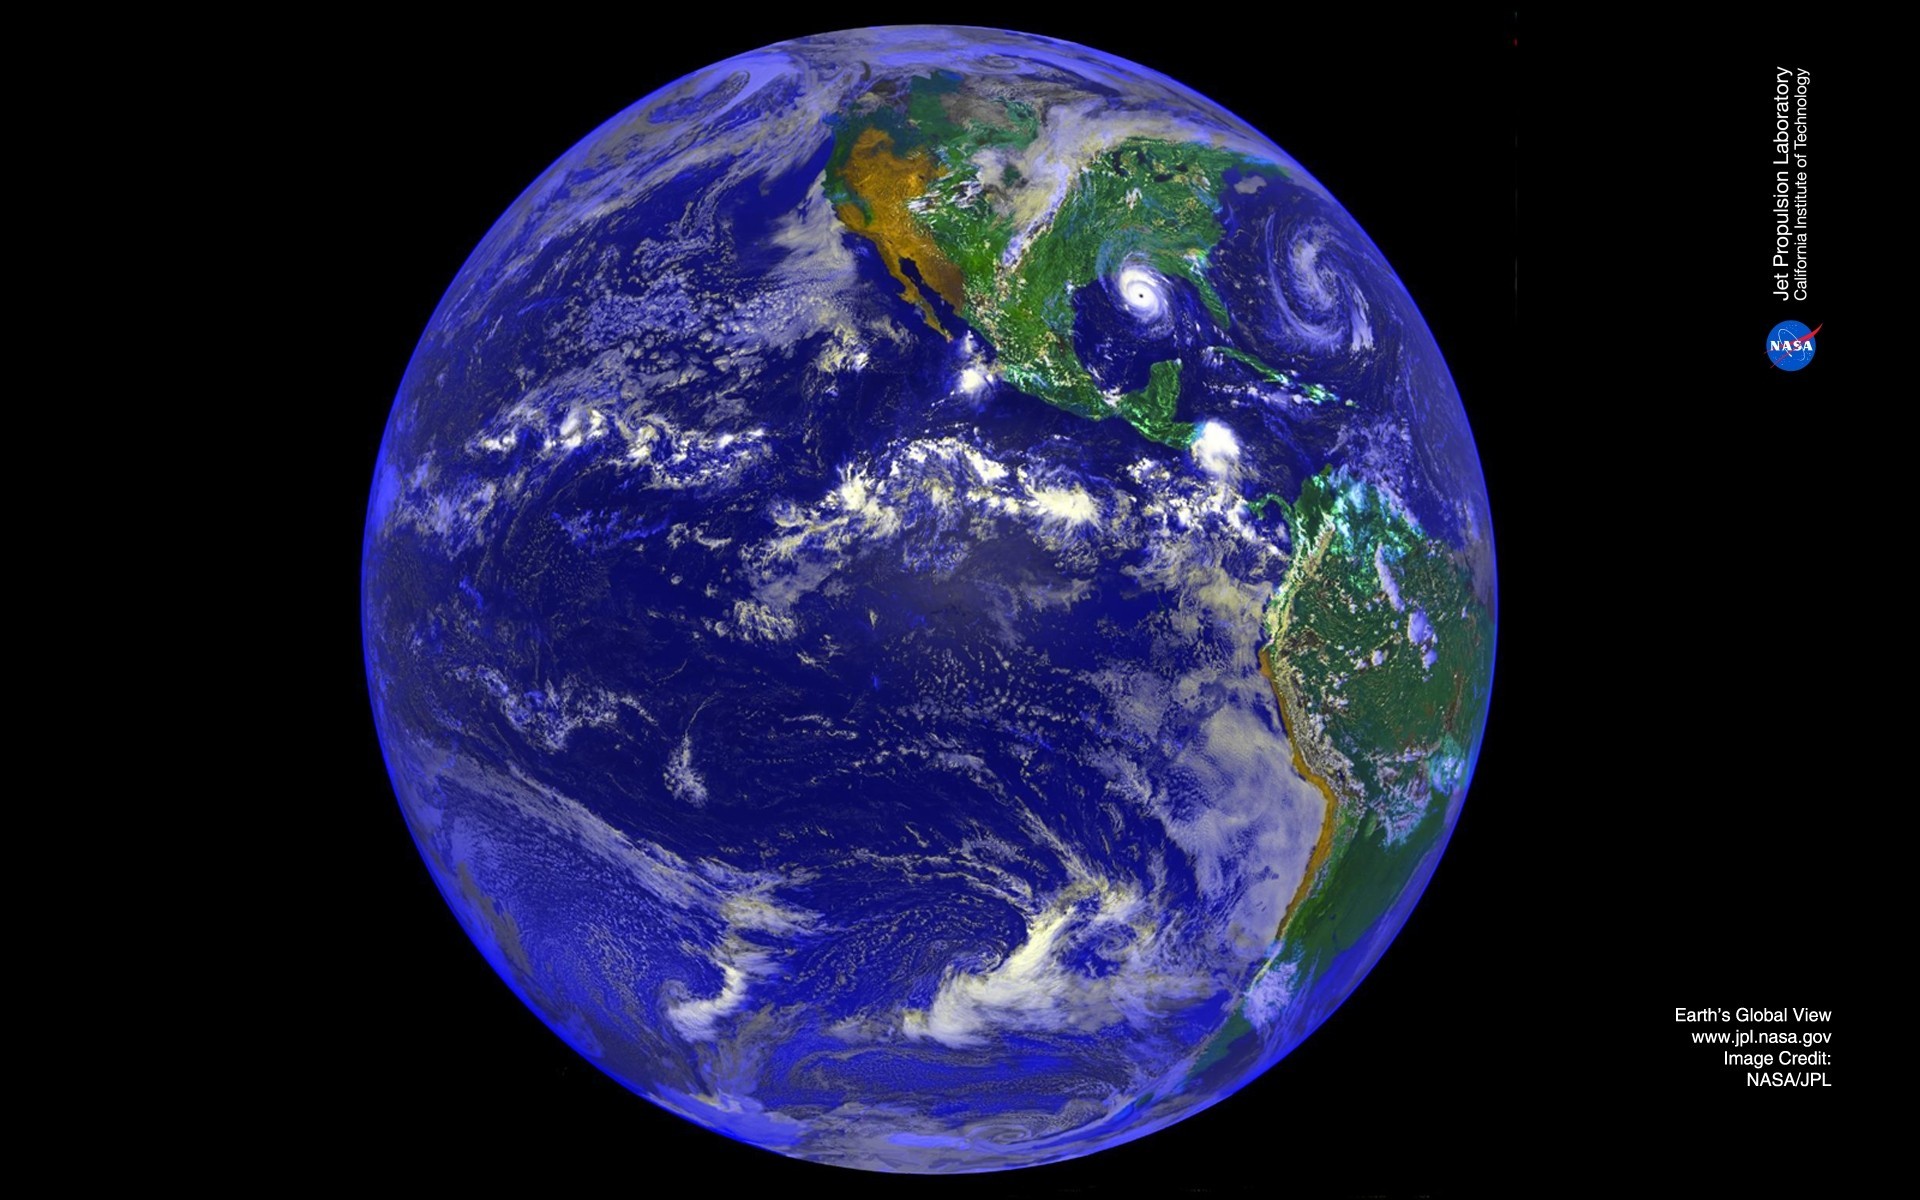 Условия для жизни на планете. Планета земля. Изображение планеты земля. Планета из космоса. Земной шар.